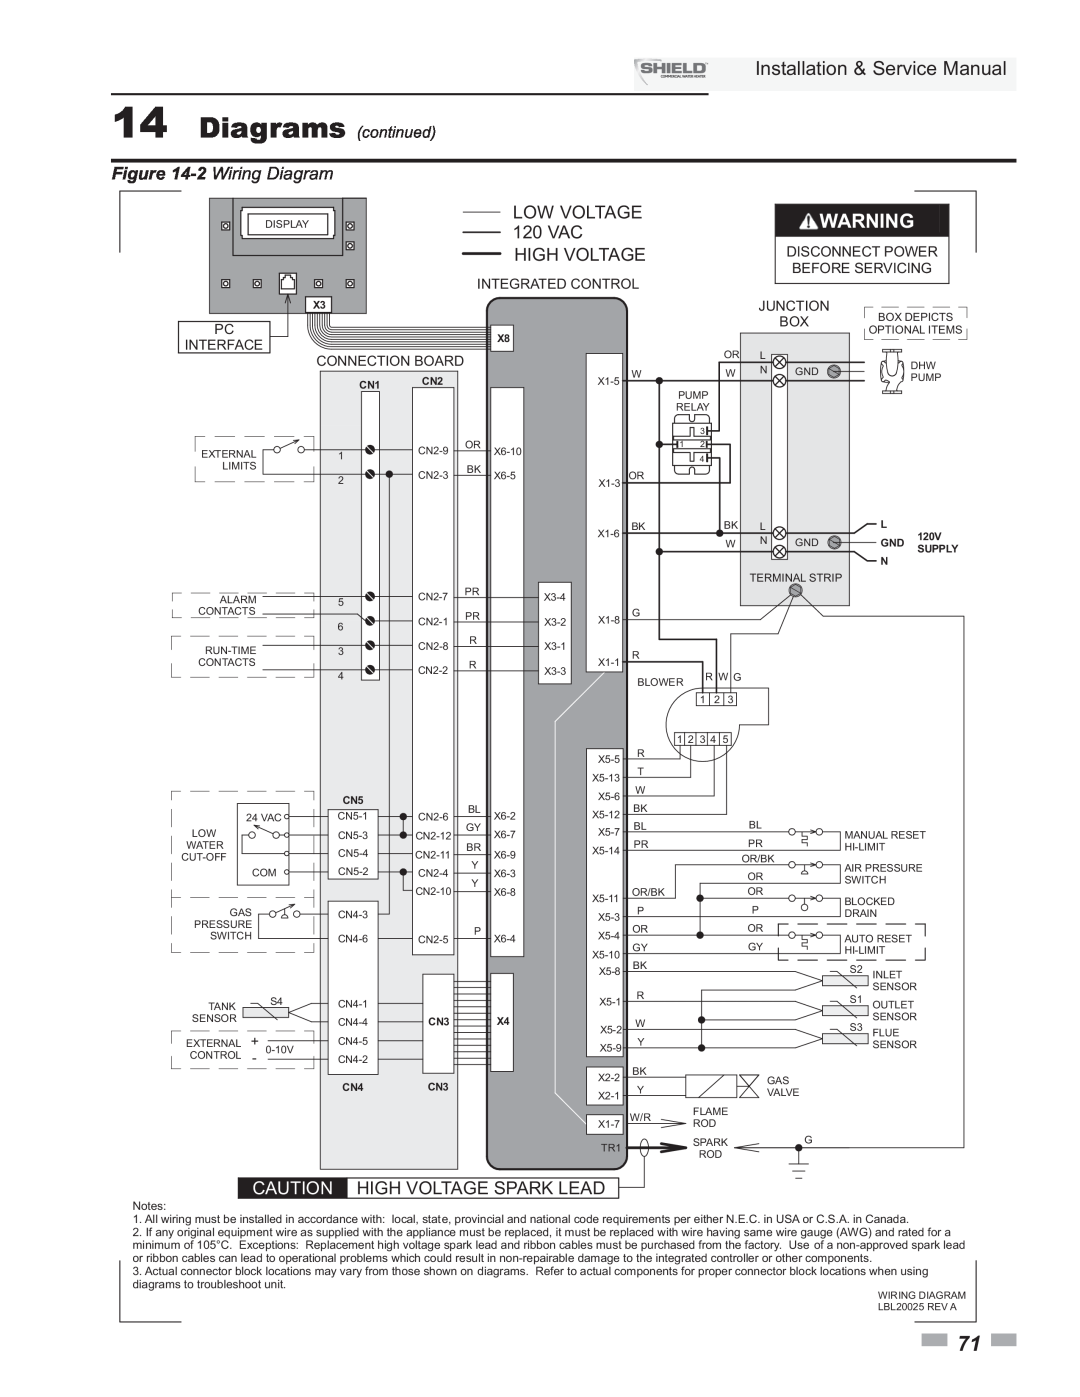 Lochinvar SNR200-100, SNA500-125 Installation & Service Manual, Low Voltage, 120 VAC, Caution High Voltage Spark Lead 